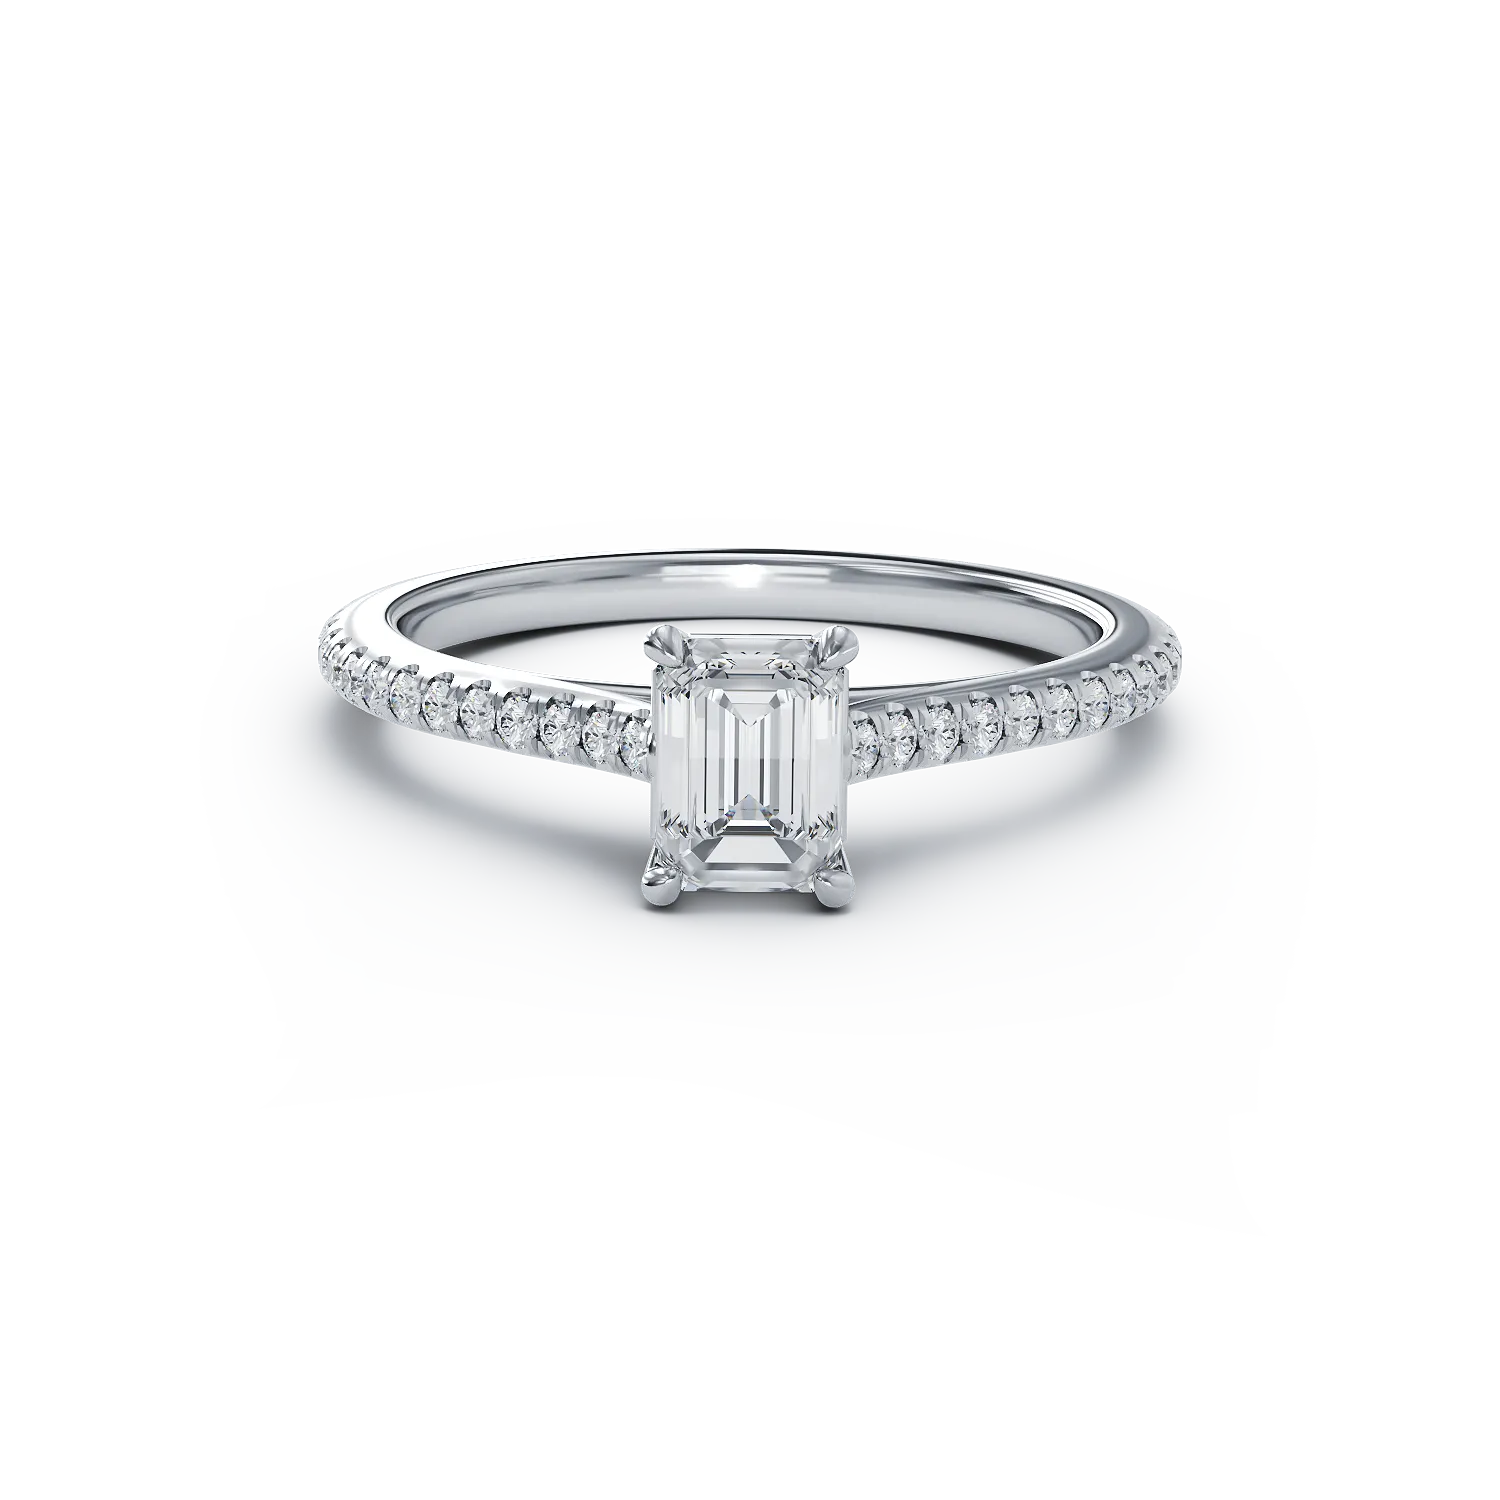 Platinum engagement ring with 0.62ct diamond and 0.19ct diamonds